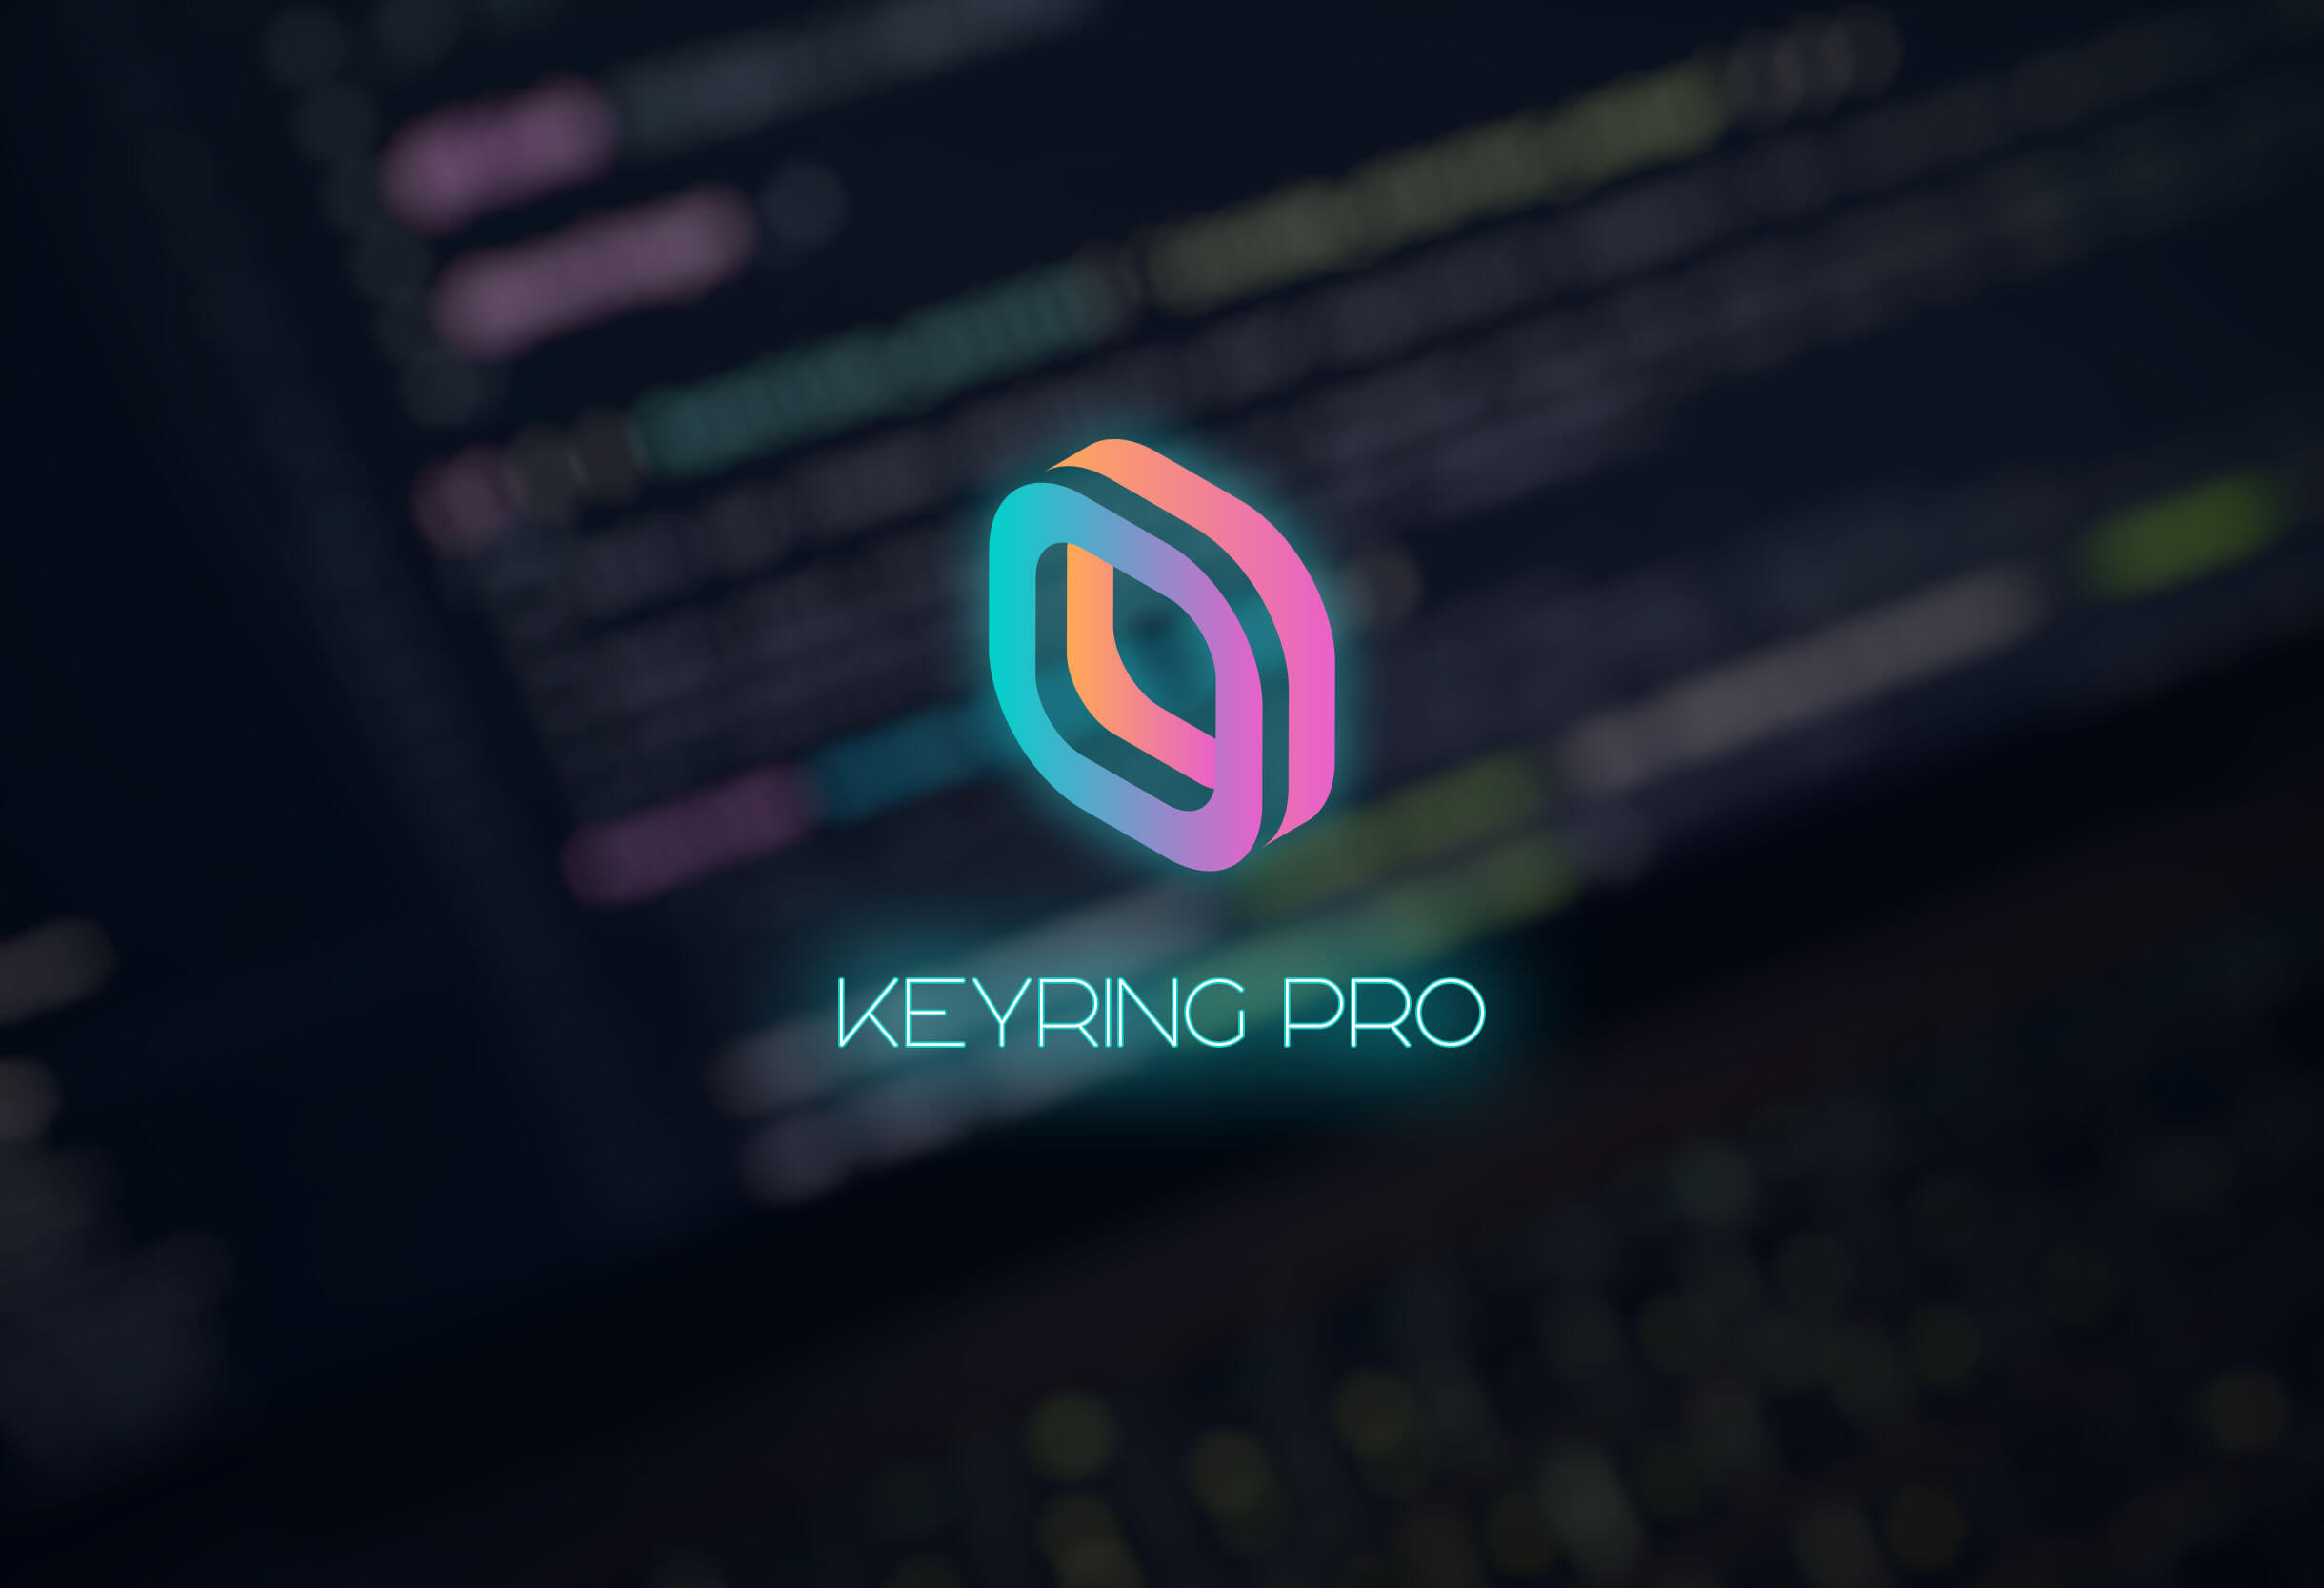 keyring pro feature image